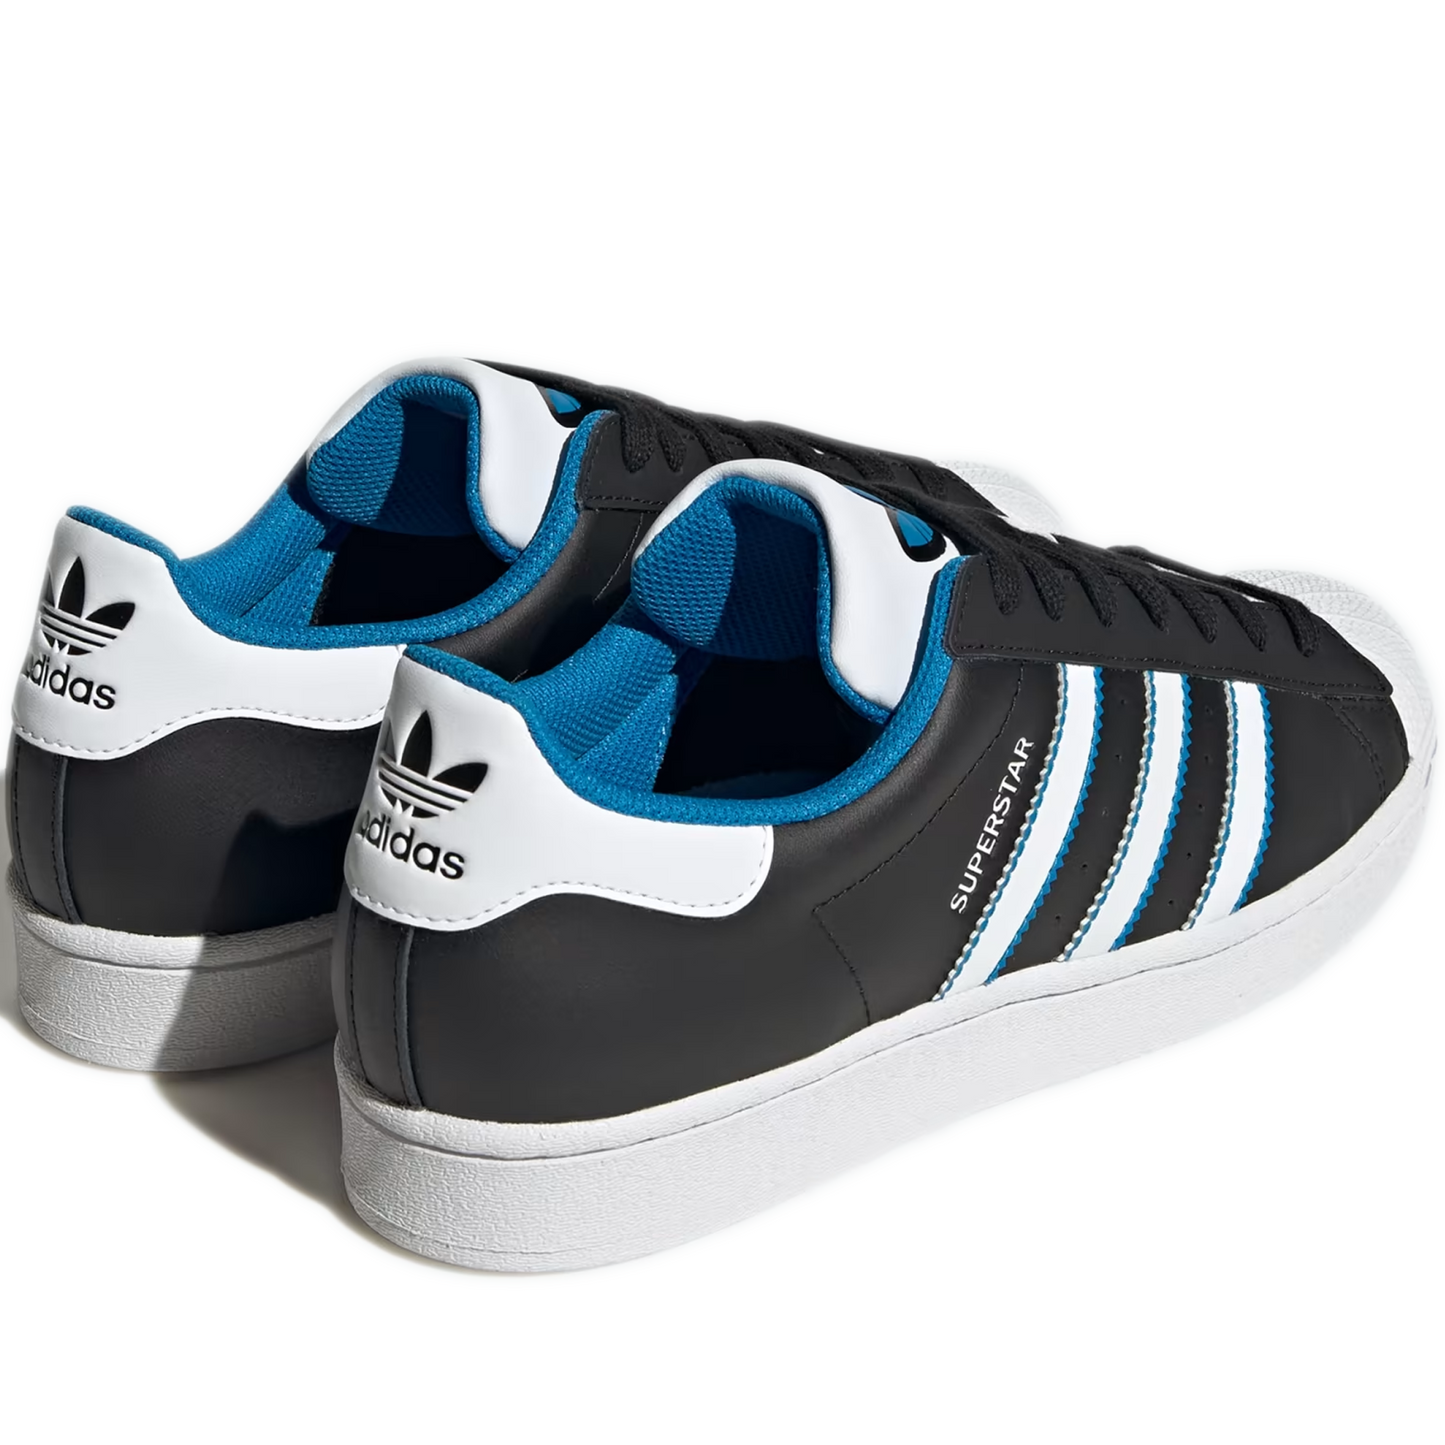 Men's Adidas Superstar Shoes - Black/ White/ Blue